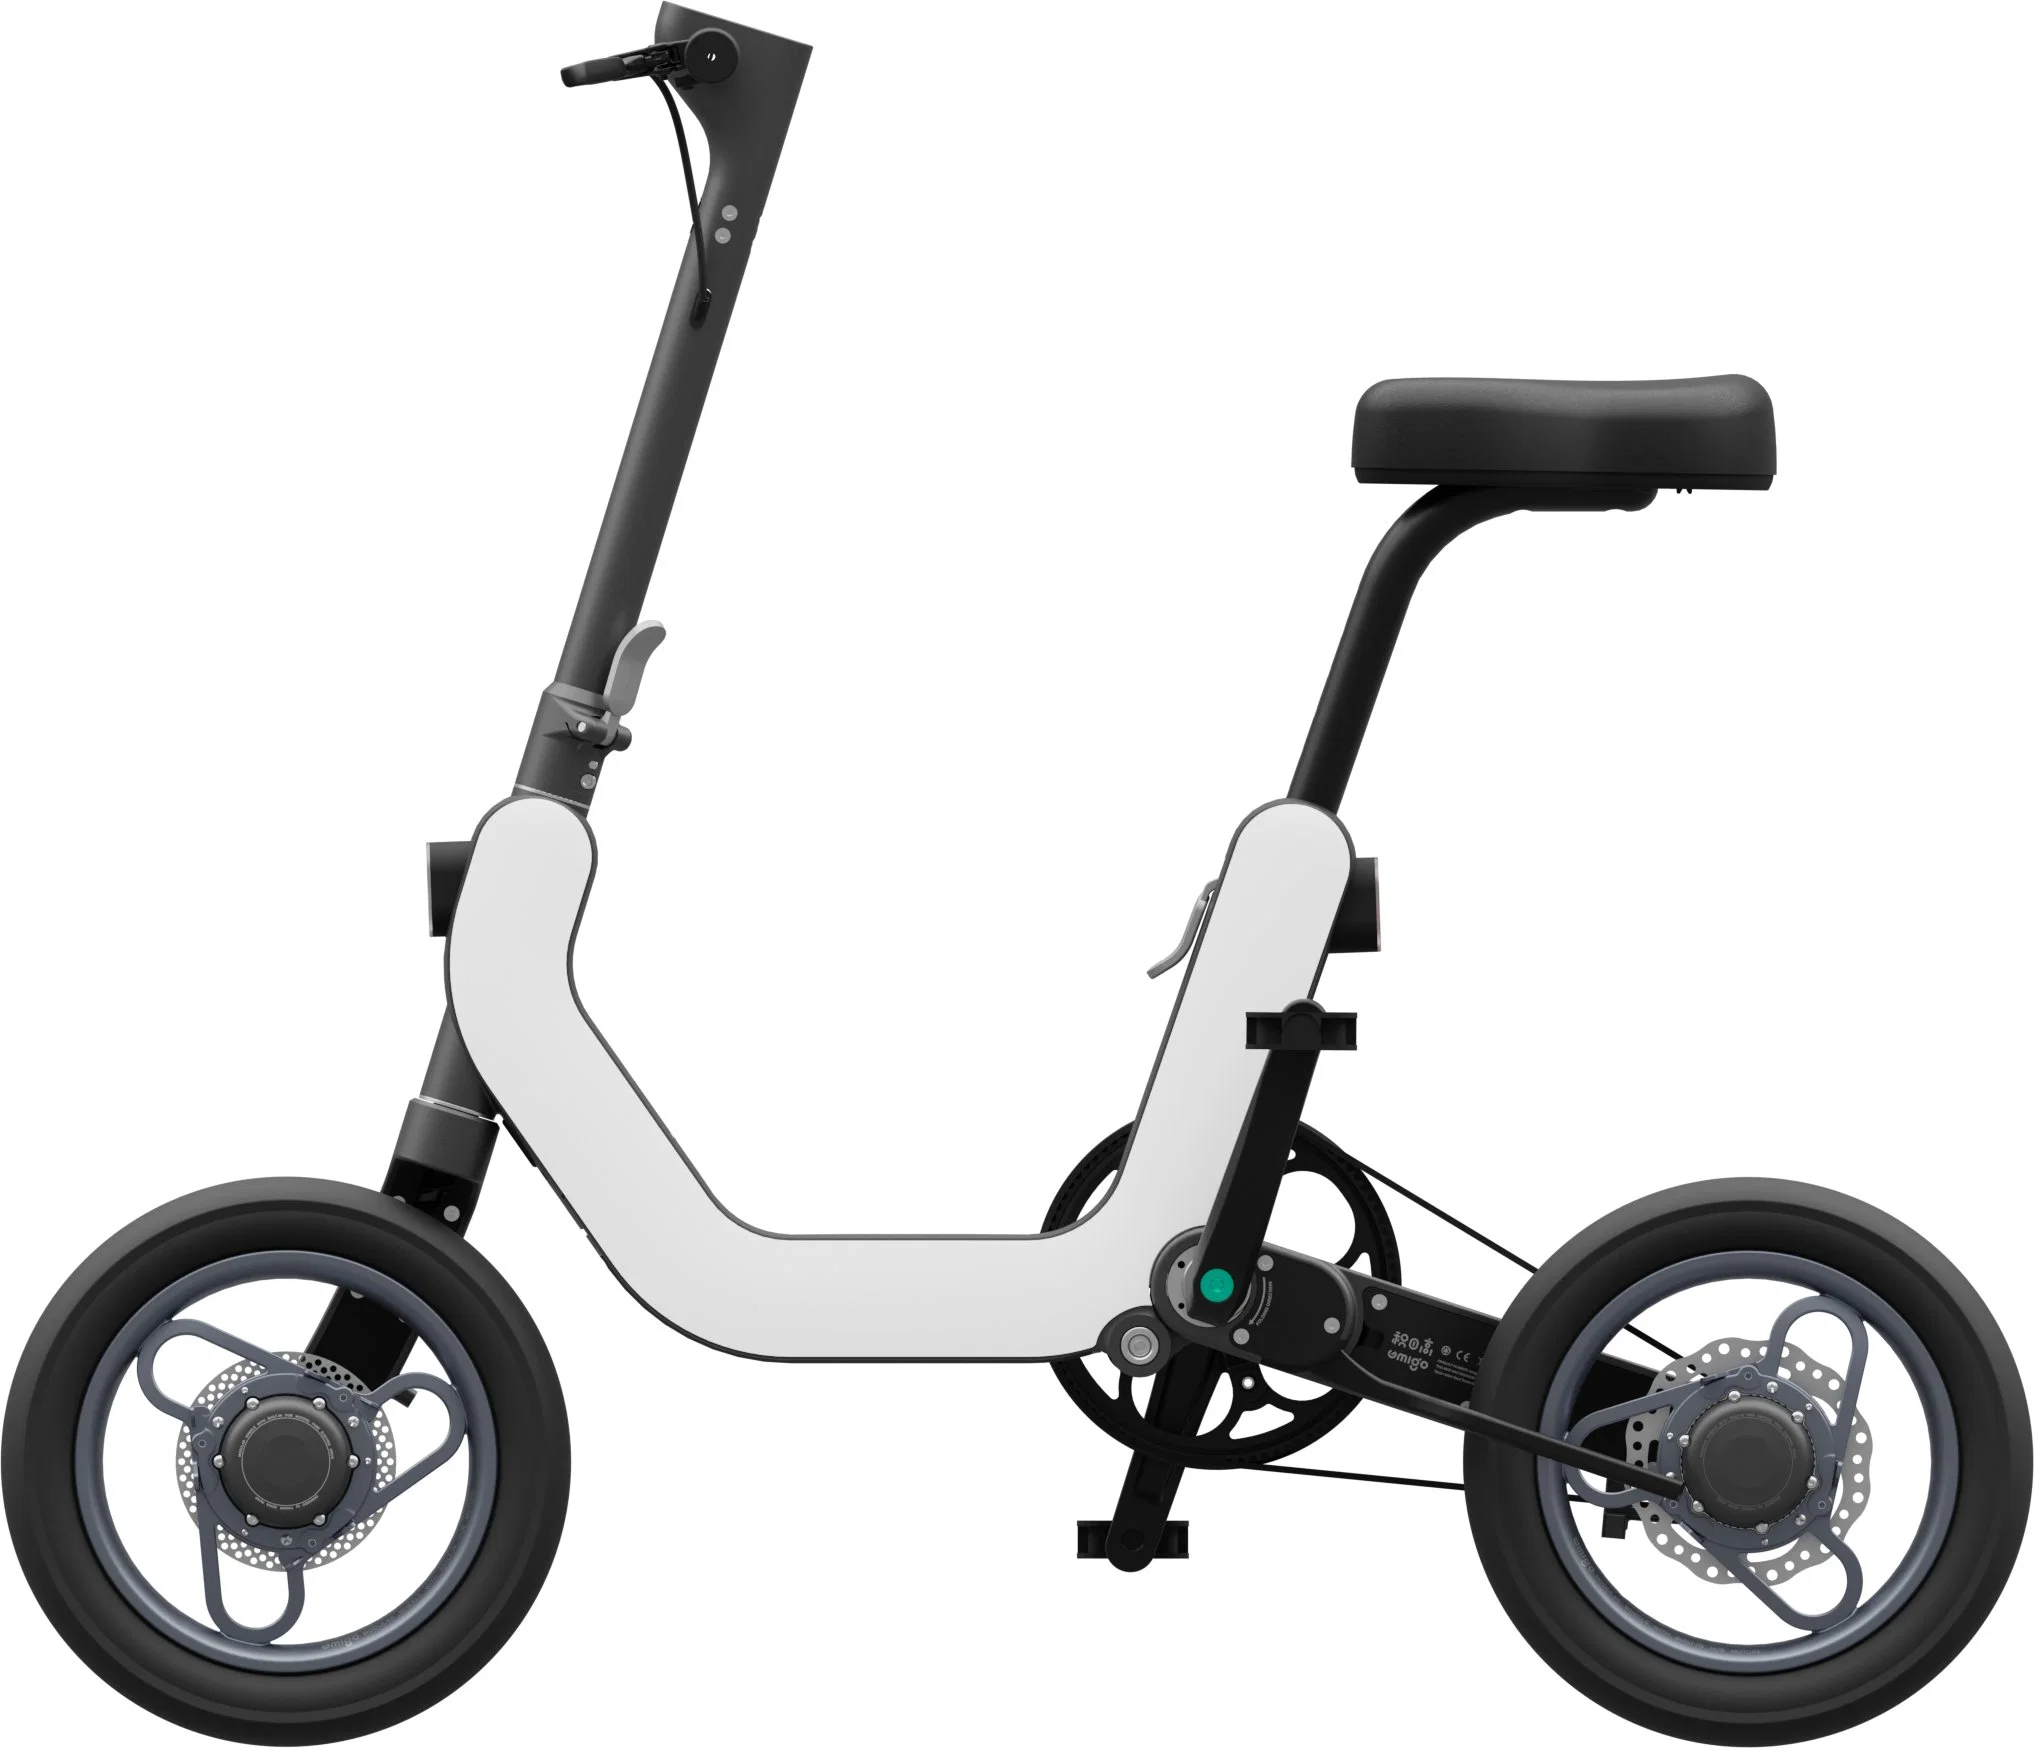 OEM / ODM 250W 36V 7,8ah Lithium-Batterie Fahrrad Gürtel angetrieben elektrisch Faltbares Fahrrad